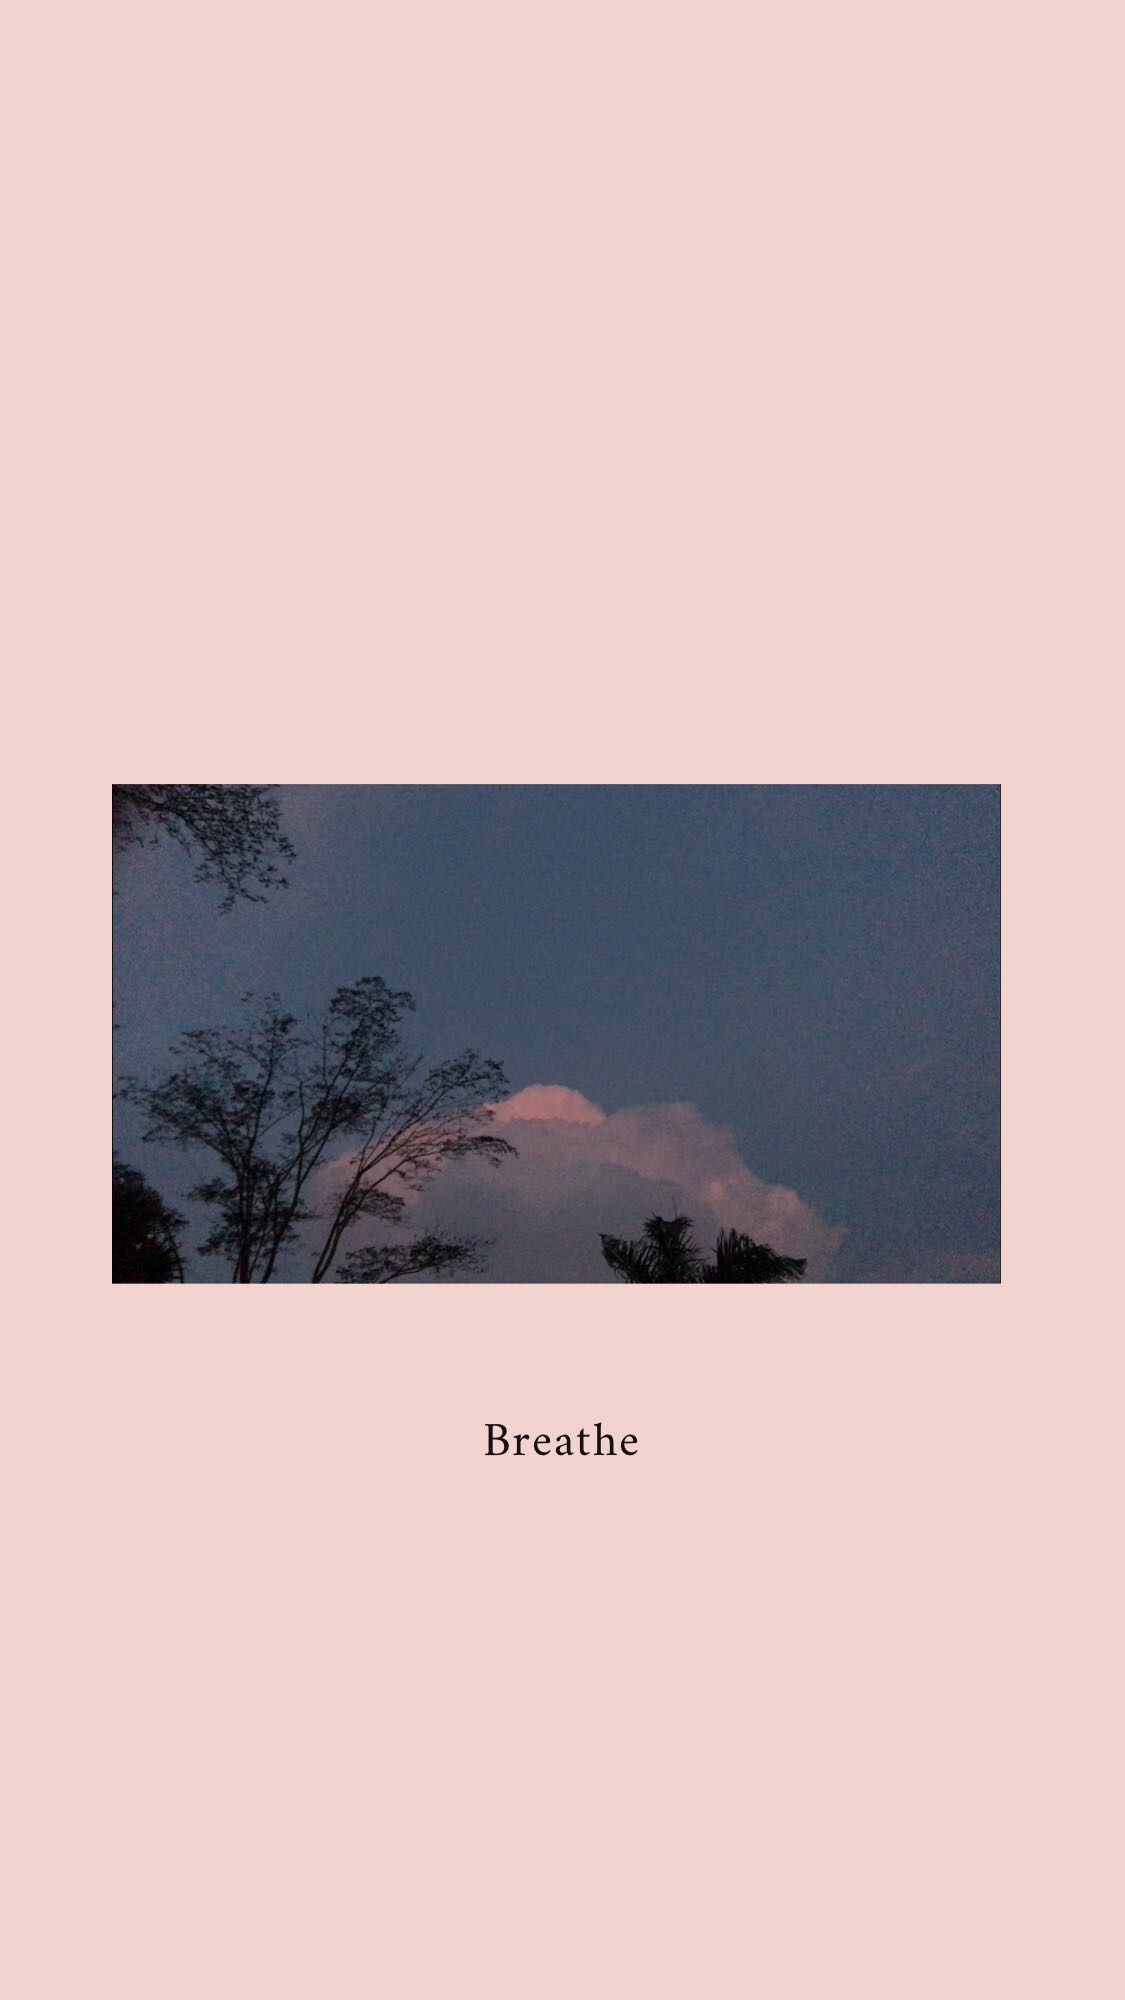 Free download Breathe cute aesthetic wallpaper in 2019 Tumblr